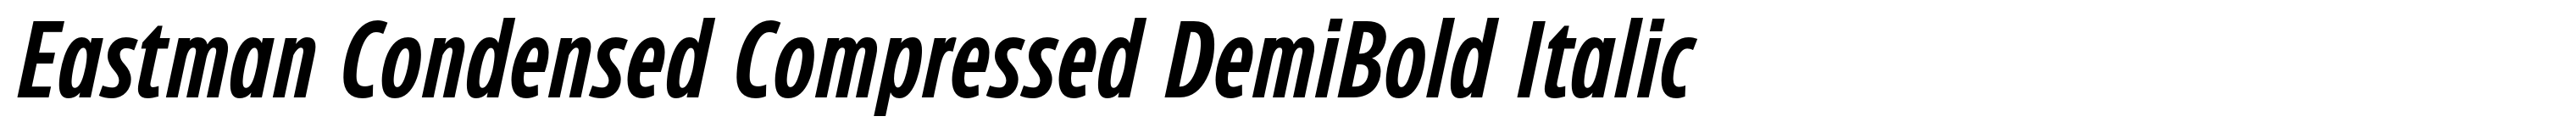 Eastman Condensed Compressed DemiBold Italic